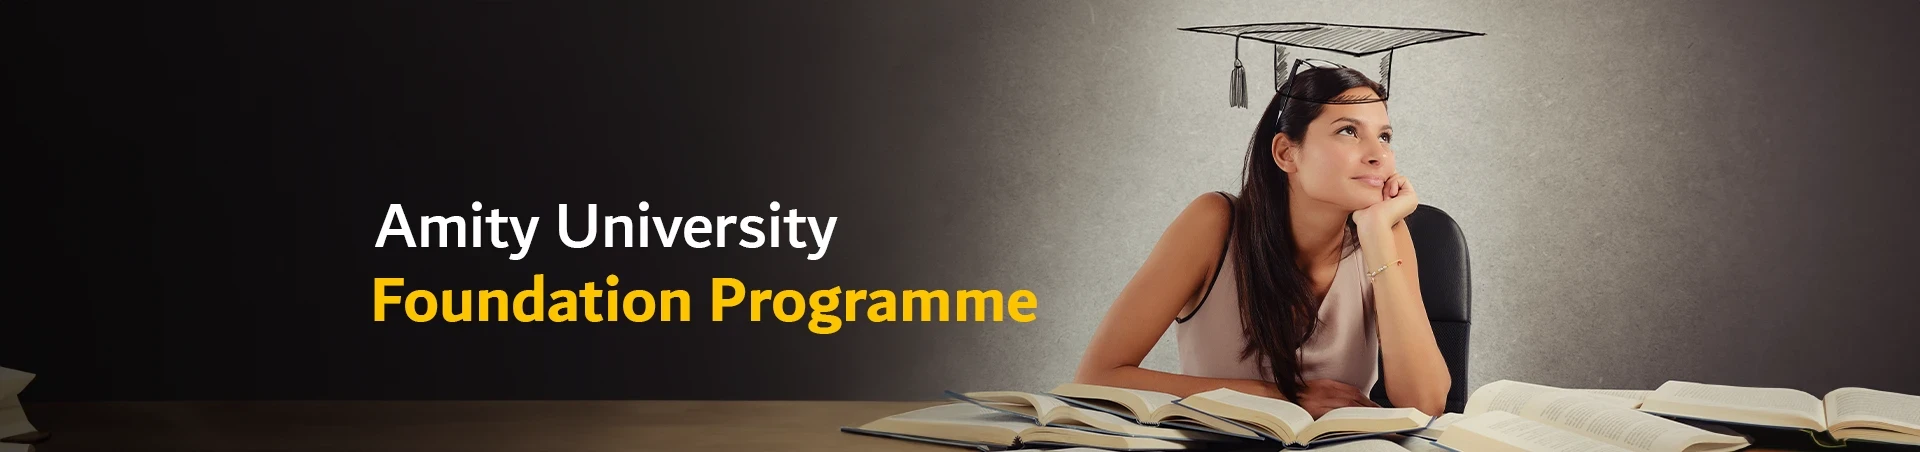 Amity University Foundation Programme